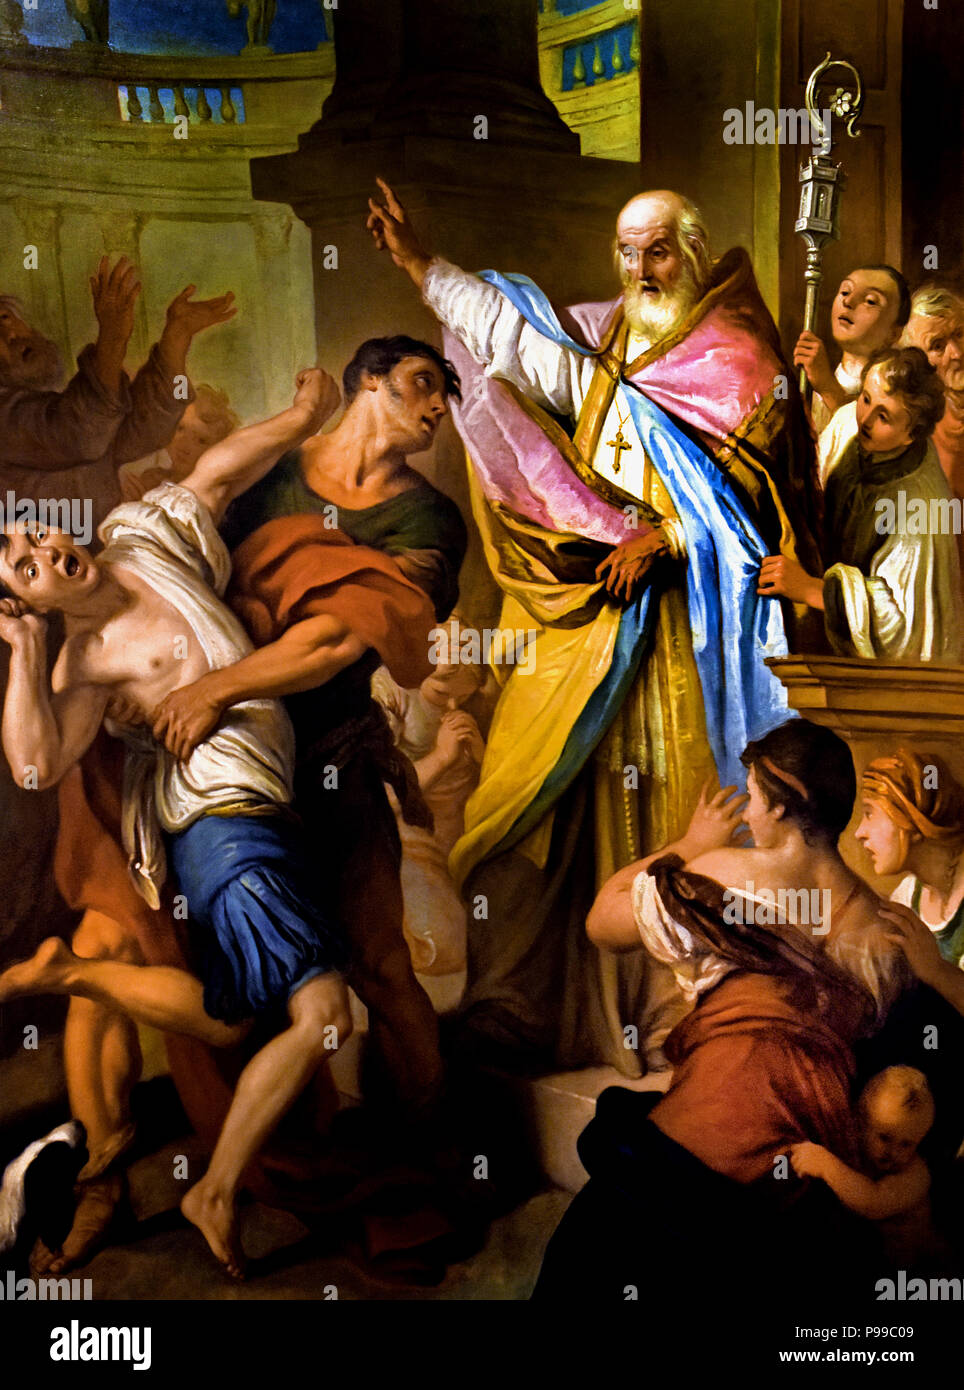 Sant'Ubaldo vescovo libera un osesso - Sant'Ubaldo évêque libère un dare par Pietro Antonio Rotari ( 1707 - 1762) peintre italien de la période baroque. L'Italie, l'italien. Banque D'Images